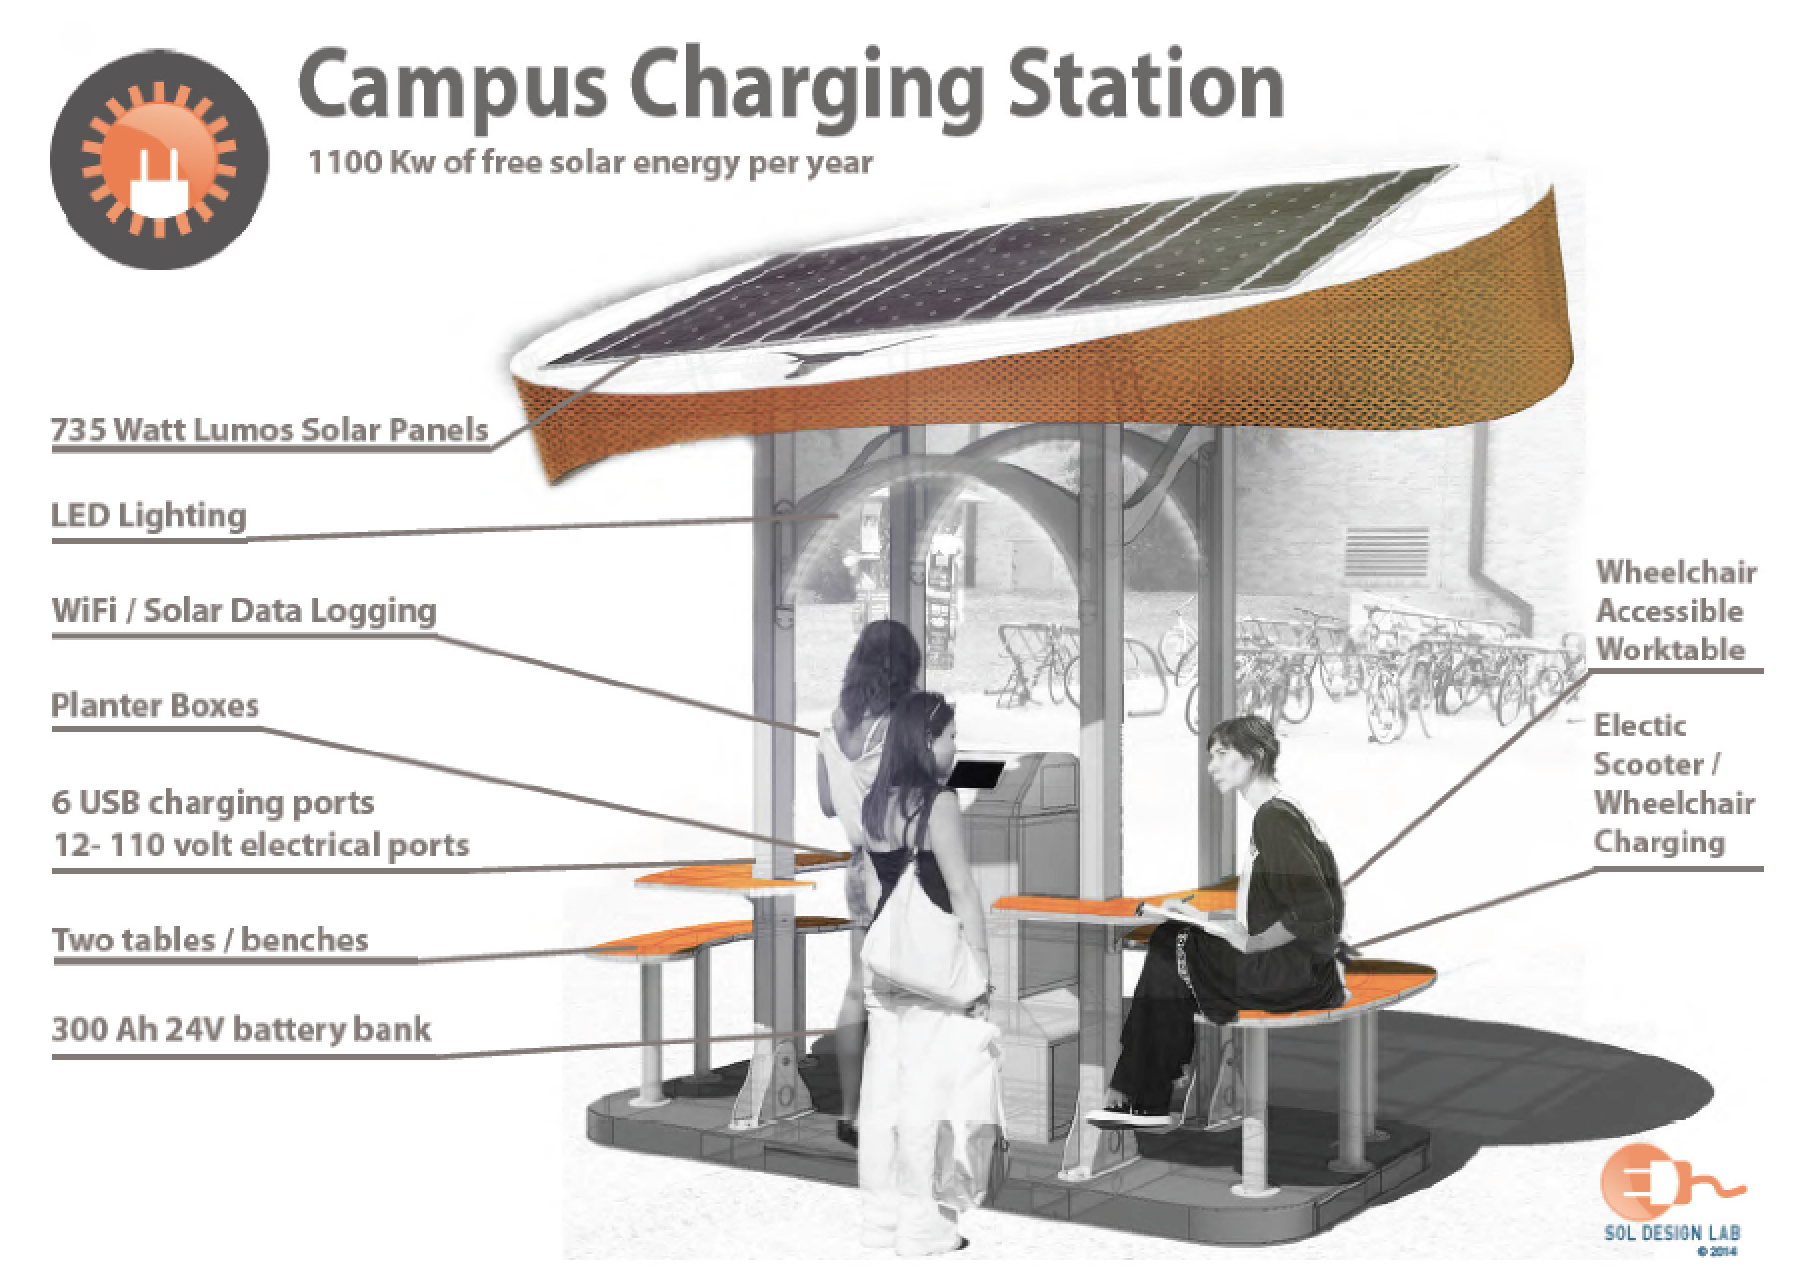 Concept - Sol Design Lab, Campus Charging Station, University of Texas at Austin, Austin, TX, 2014